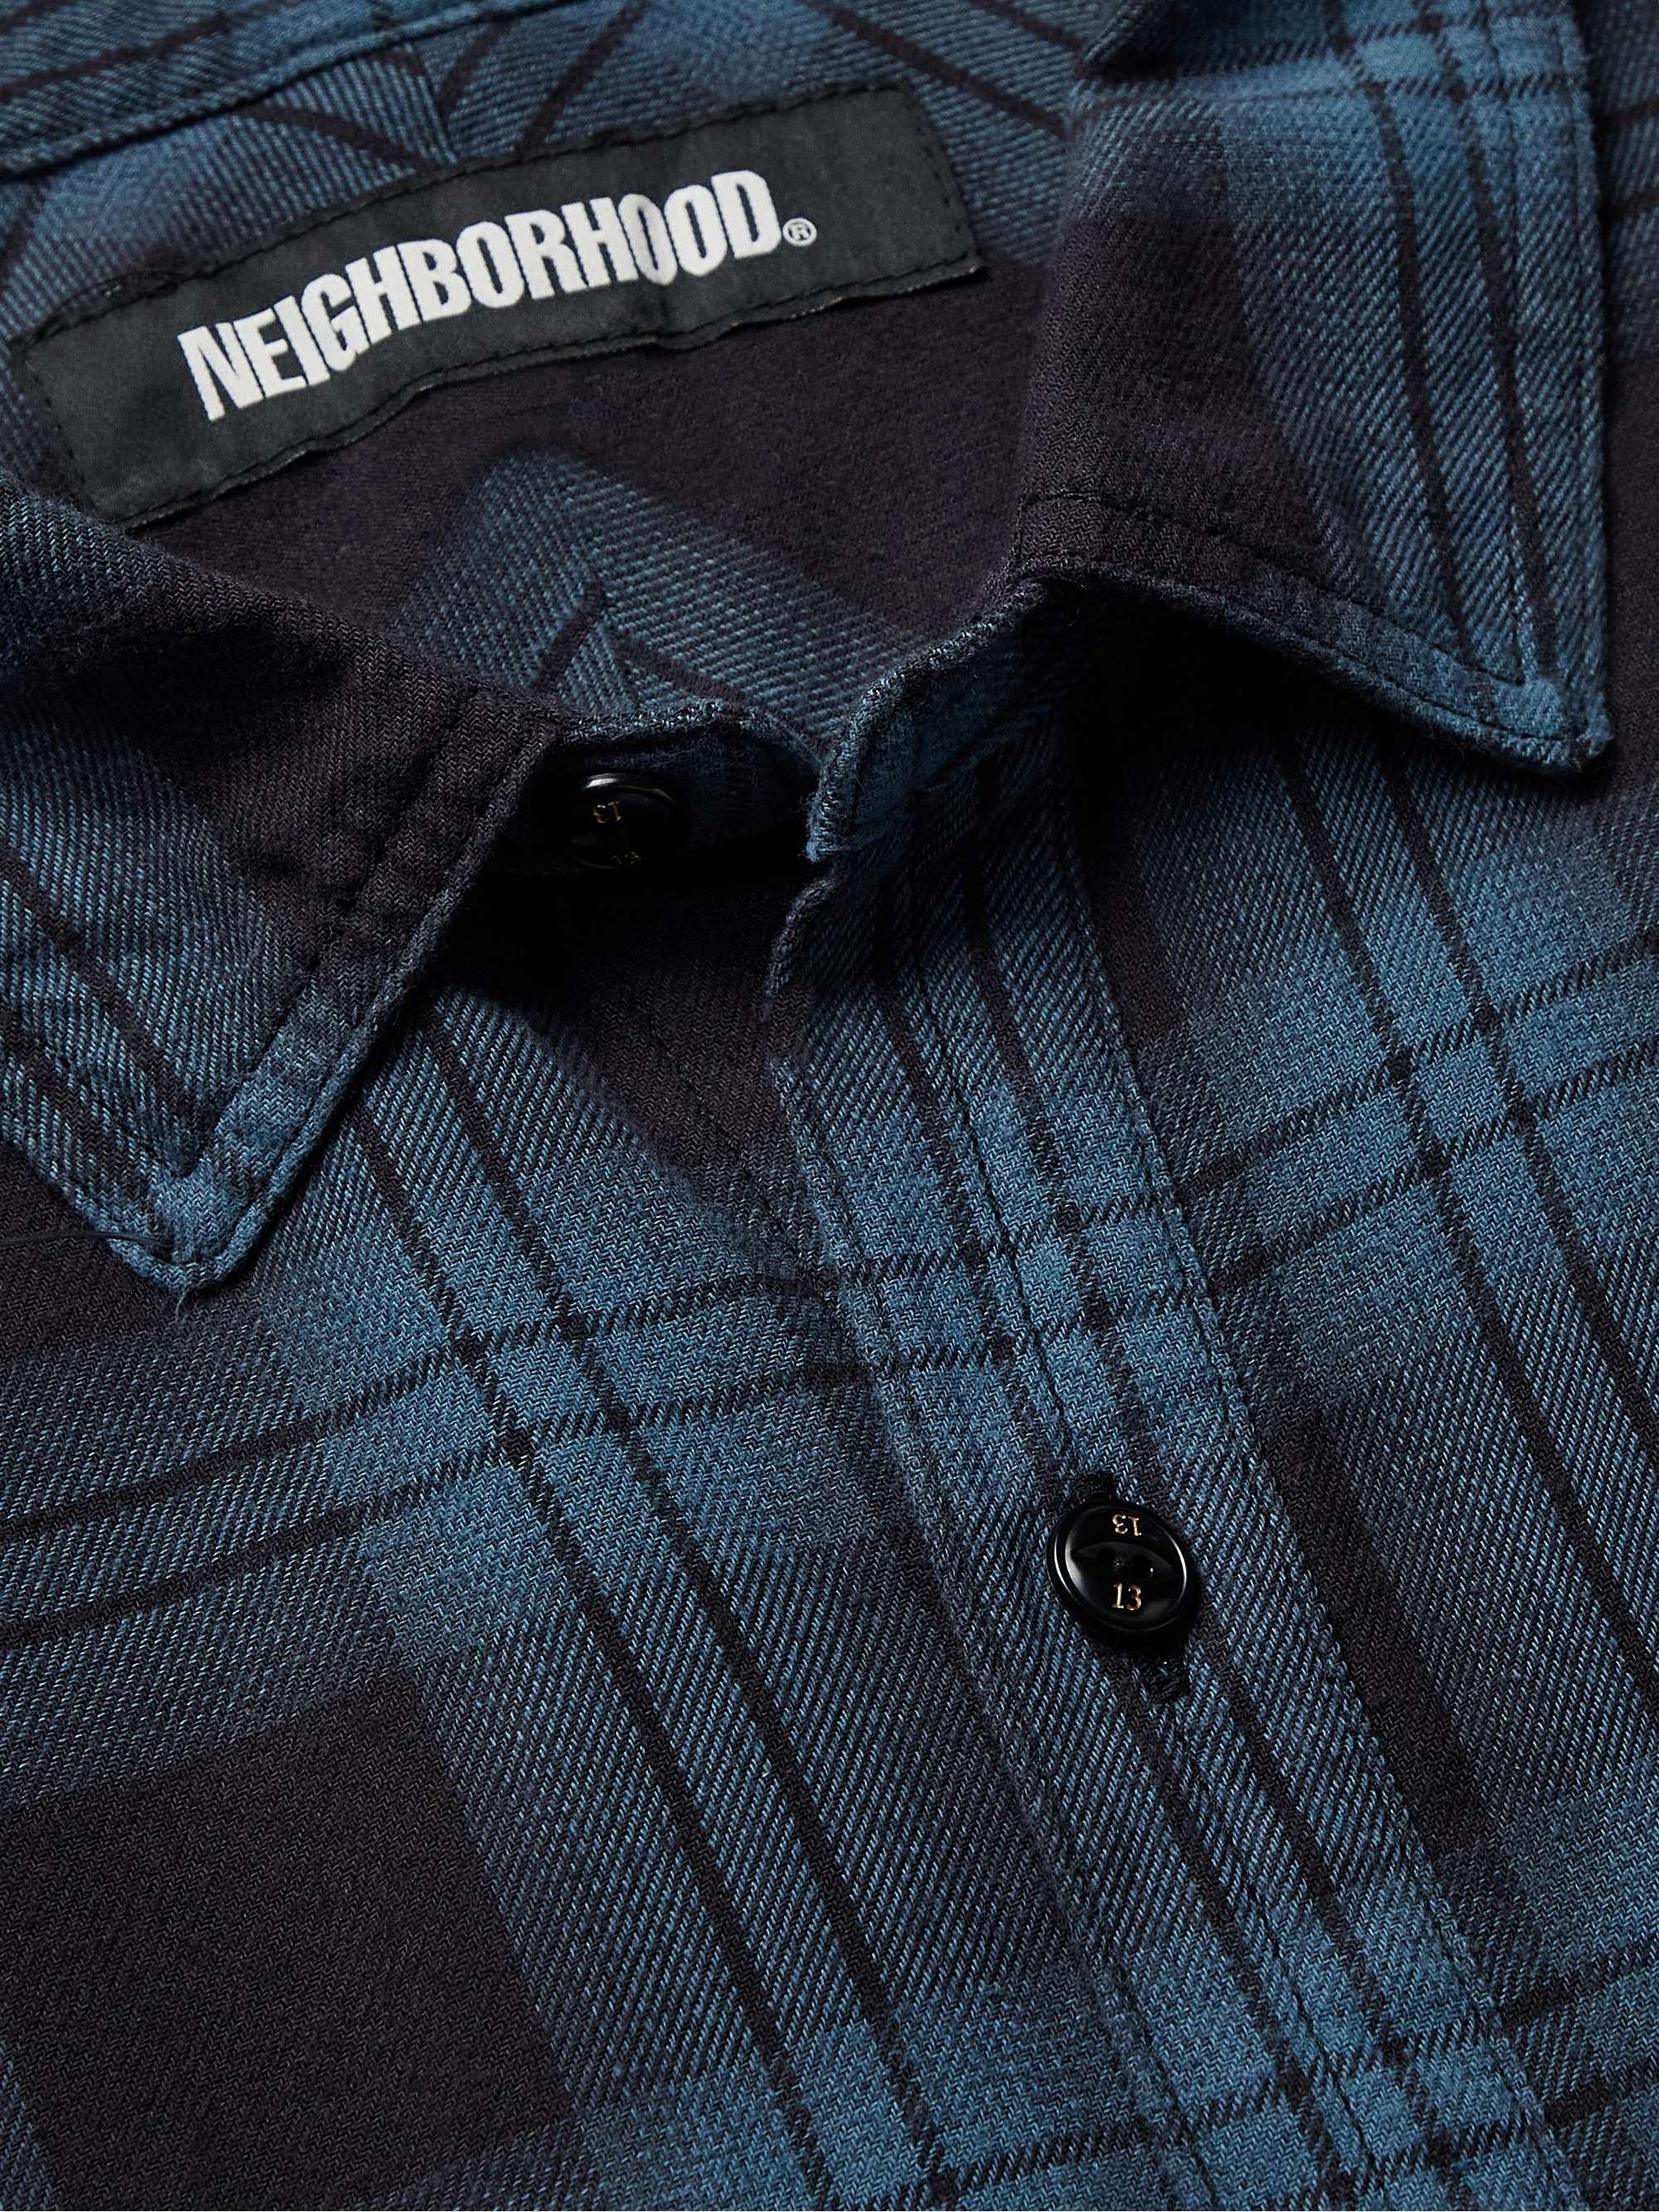 NEIGHBORHOOD Nel Checked Cotton-Flannel Shirt